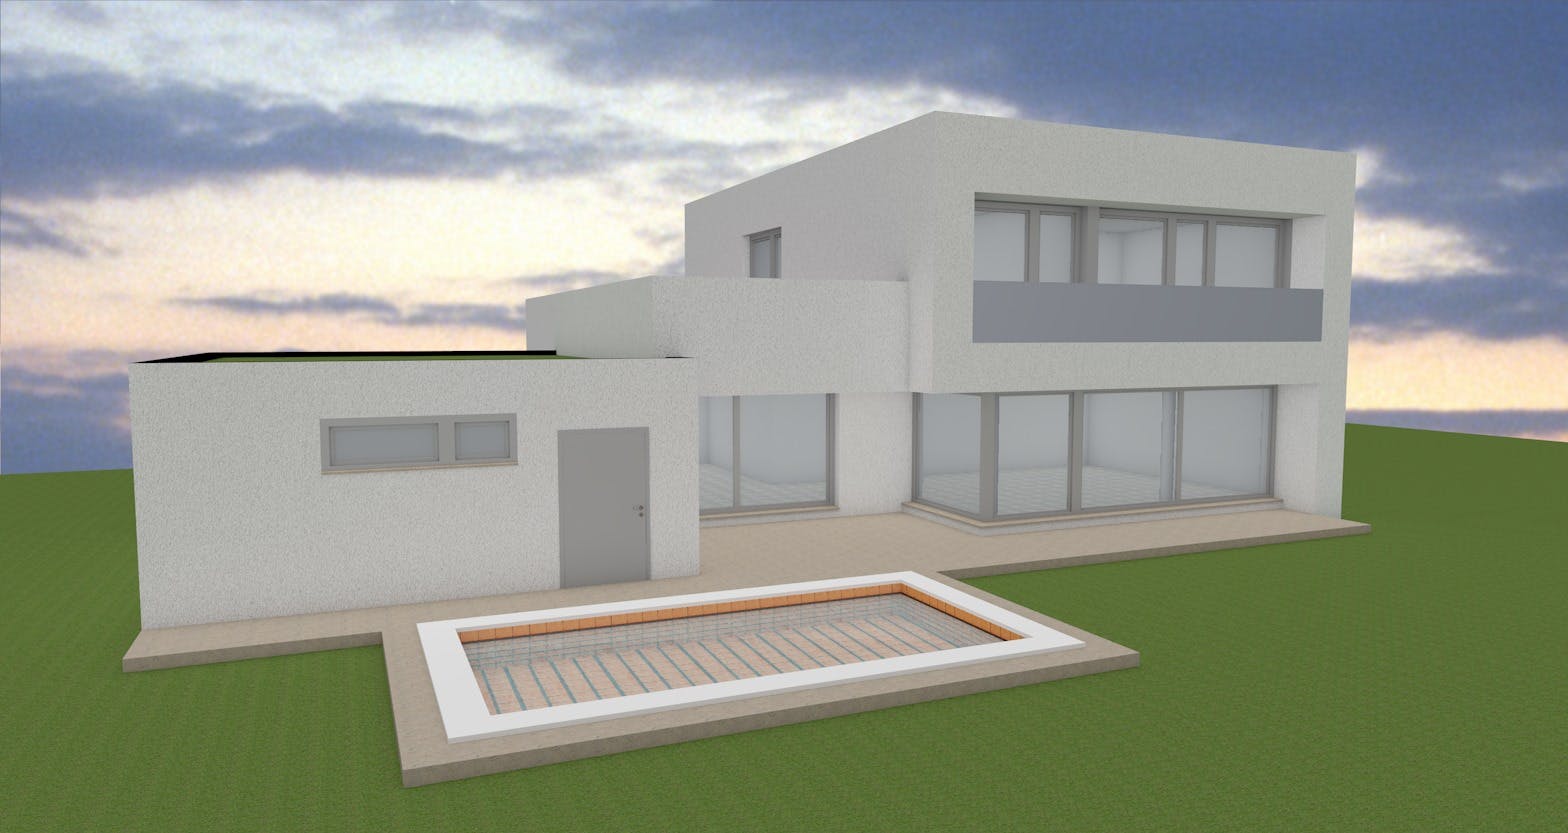 Exklusive Designer-Villa mit Pool und Panorama-Garage - Neubau